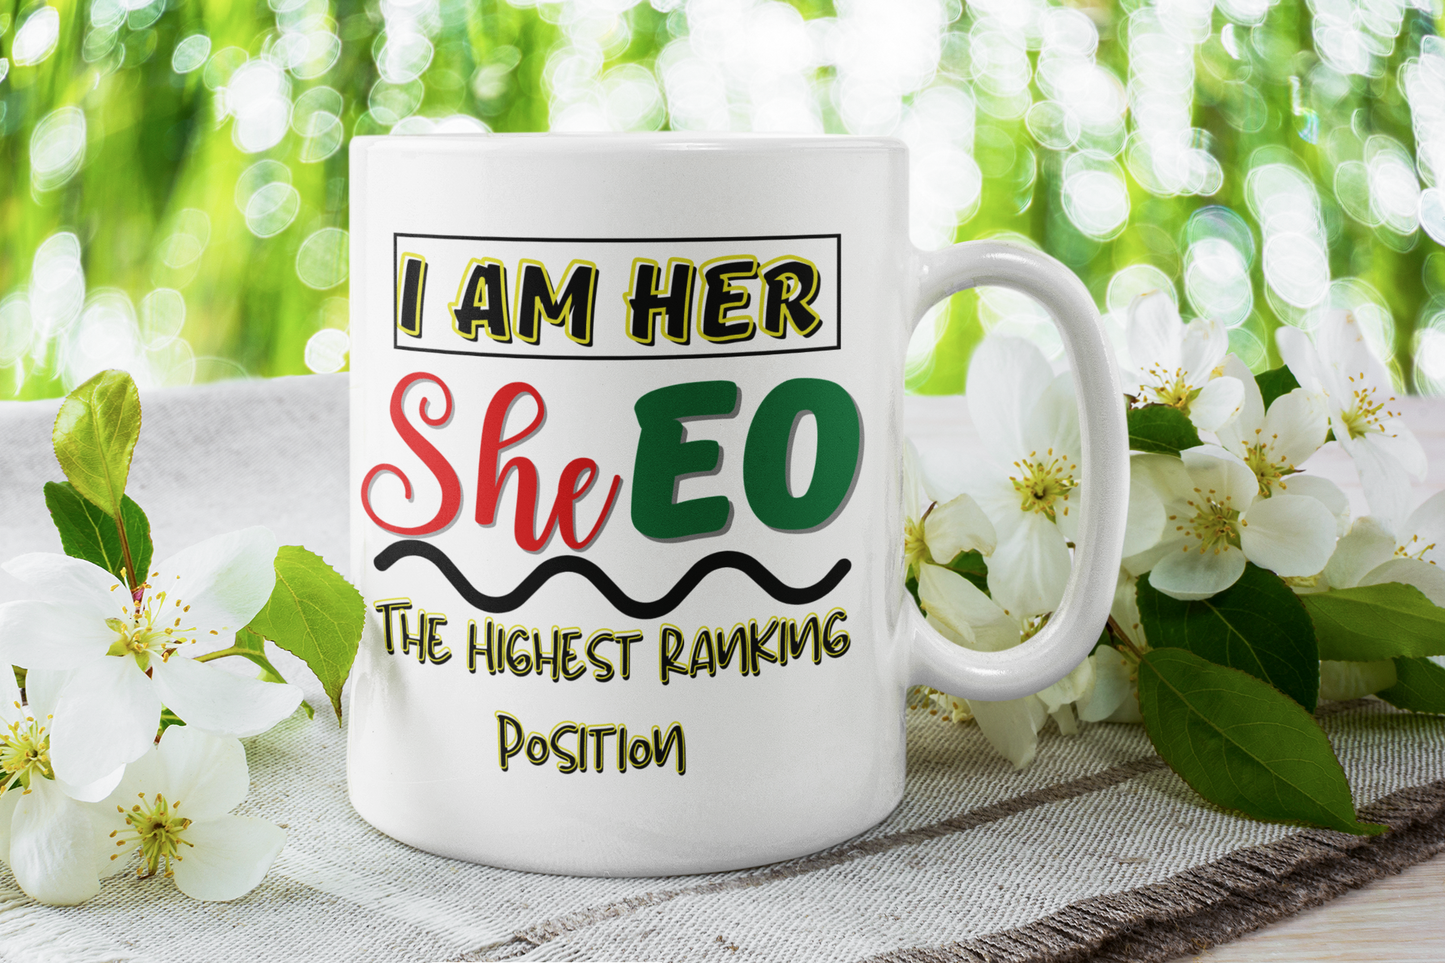 I Am Her SheEO The Highest Ranking Position Mug